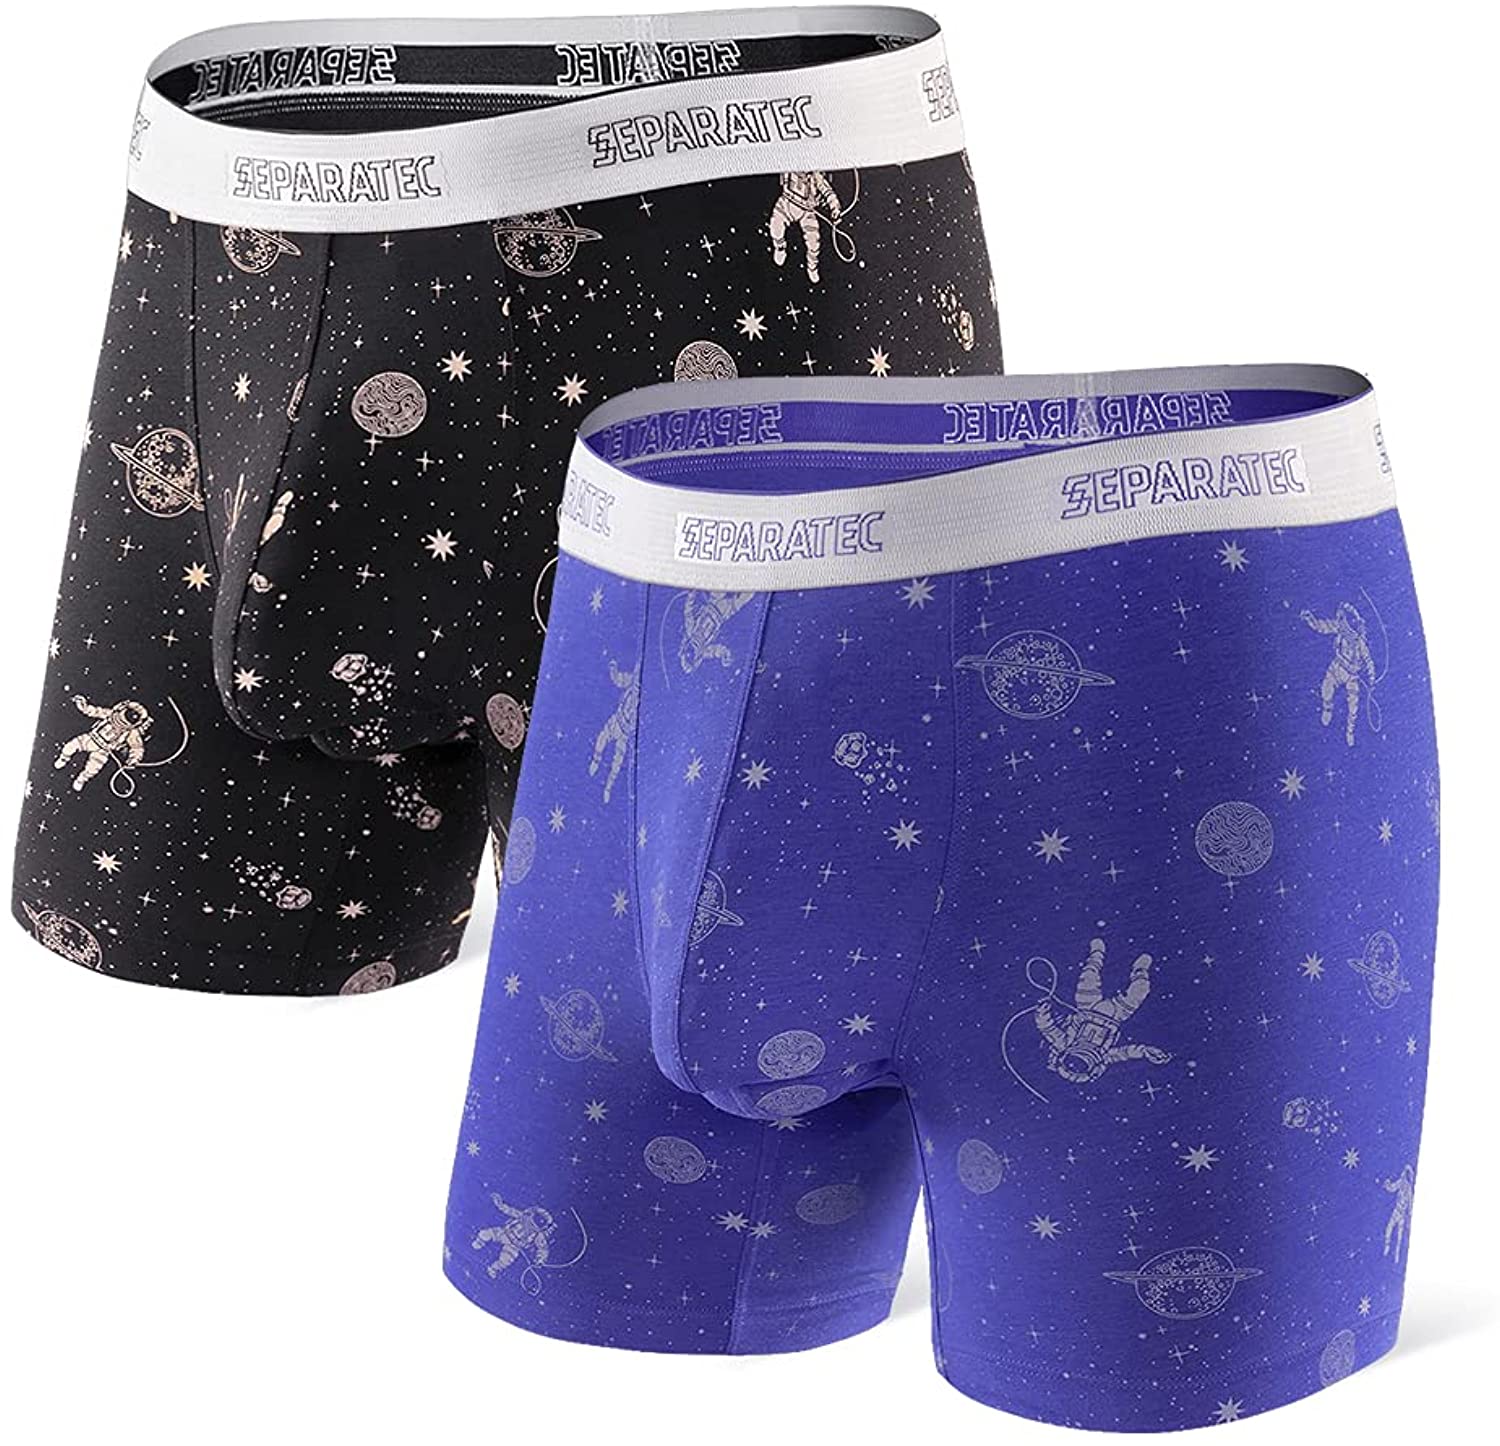 Buy SeparatecMen's Dual Pouch Underwear Comfort Soft Premium Cotton Modal  Blend Boxer Briefs 3 Pack Online at desertcartINDIA